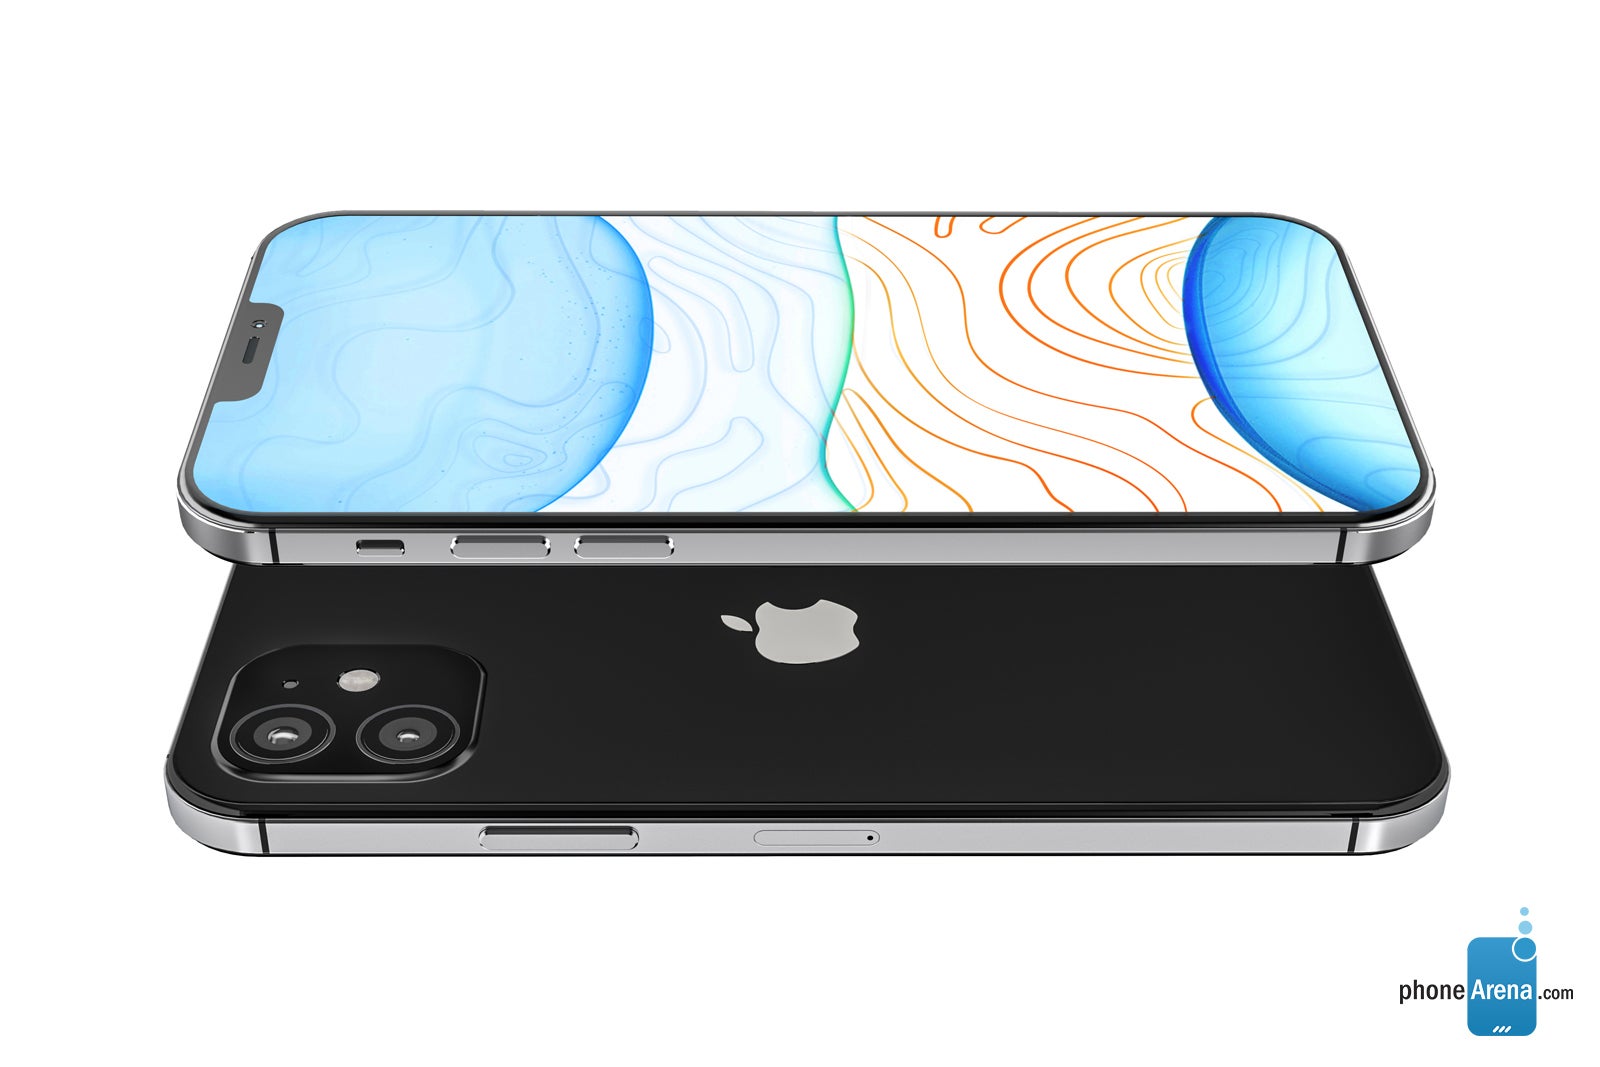 Apple iPhone 12 concept design render - Apple's 2020 iPhone 12 lineup pictured in beautiful design renders